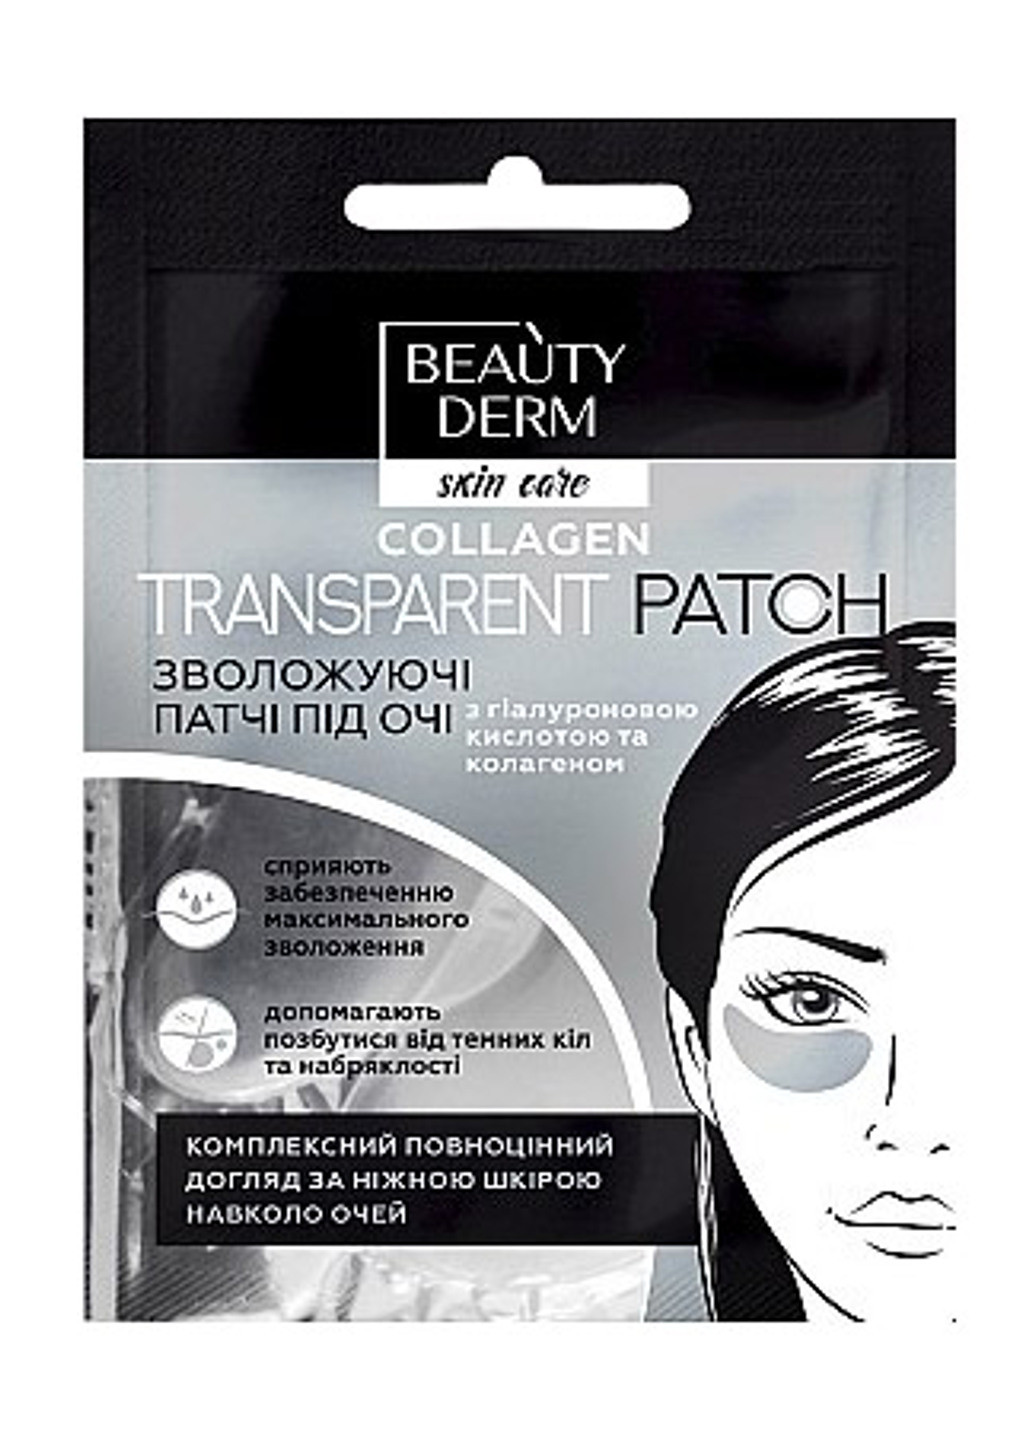 Прозорі колагенові патчі під очі Collagen Transparent Patch (2 шт.) Beauty Derm не определен (201783343)